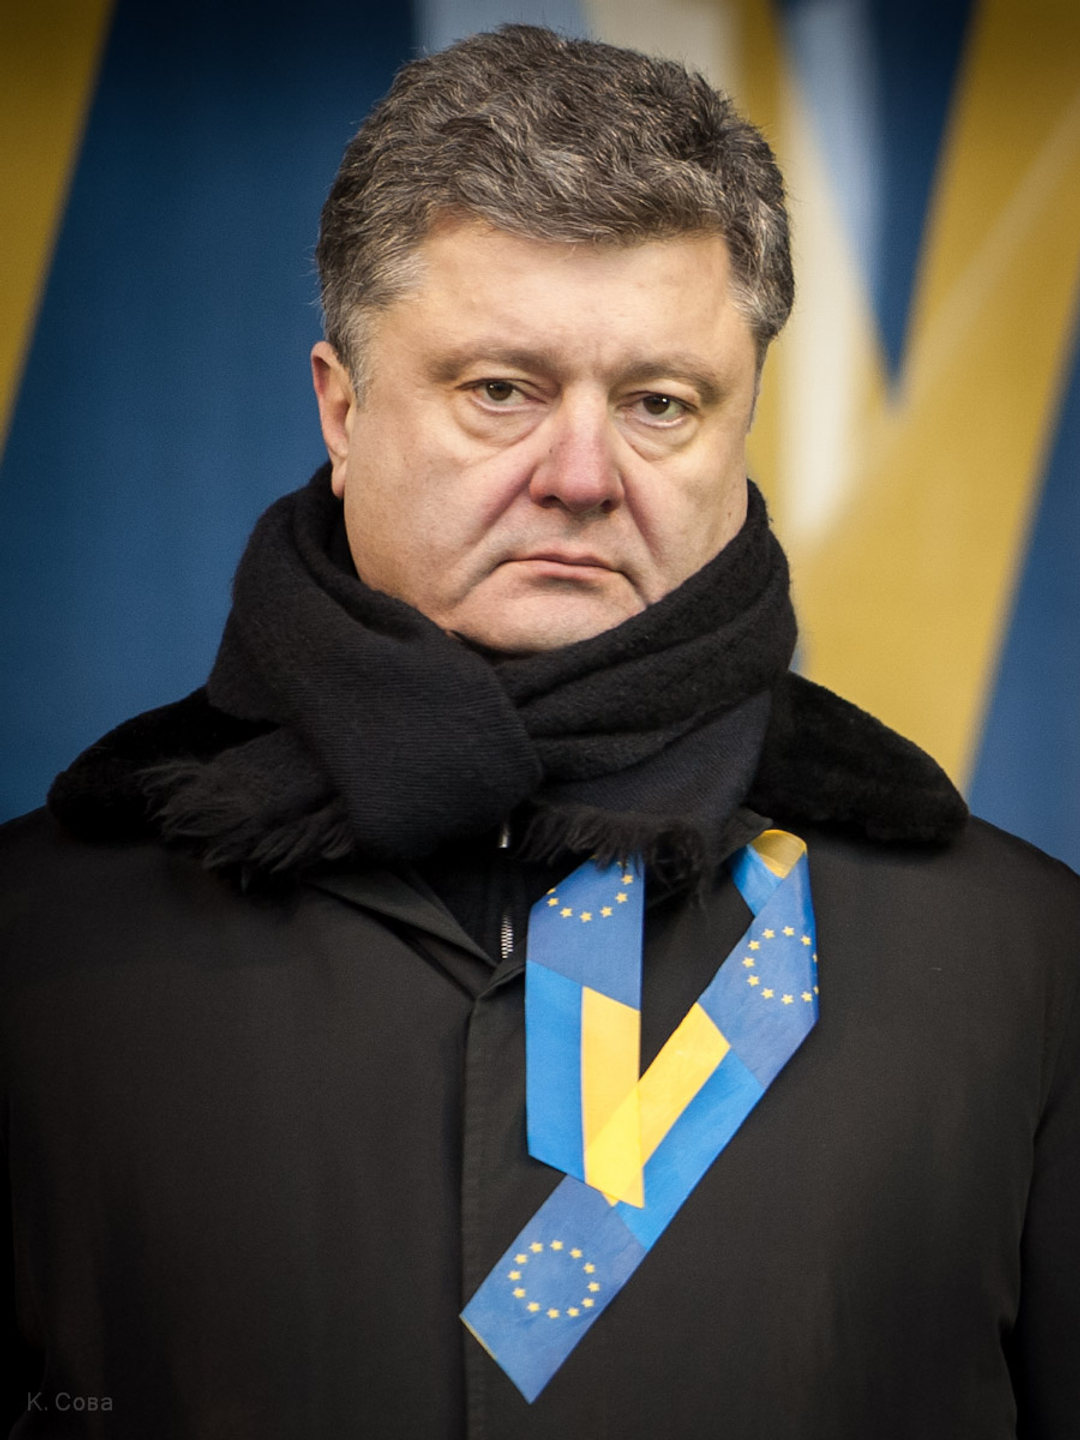 Petro Poroshenko young photos